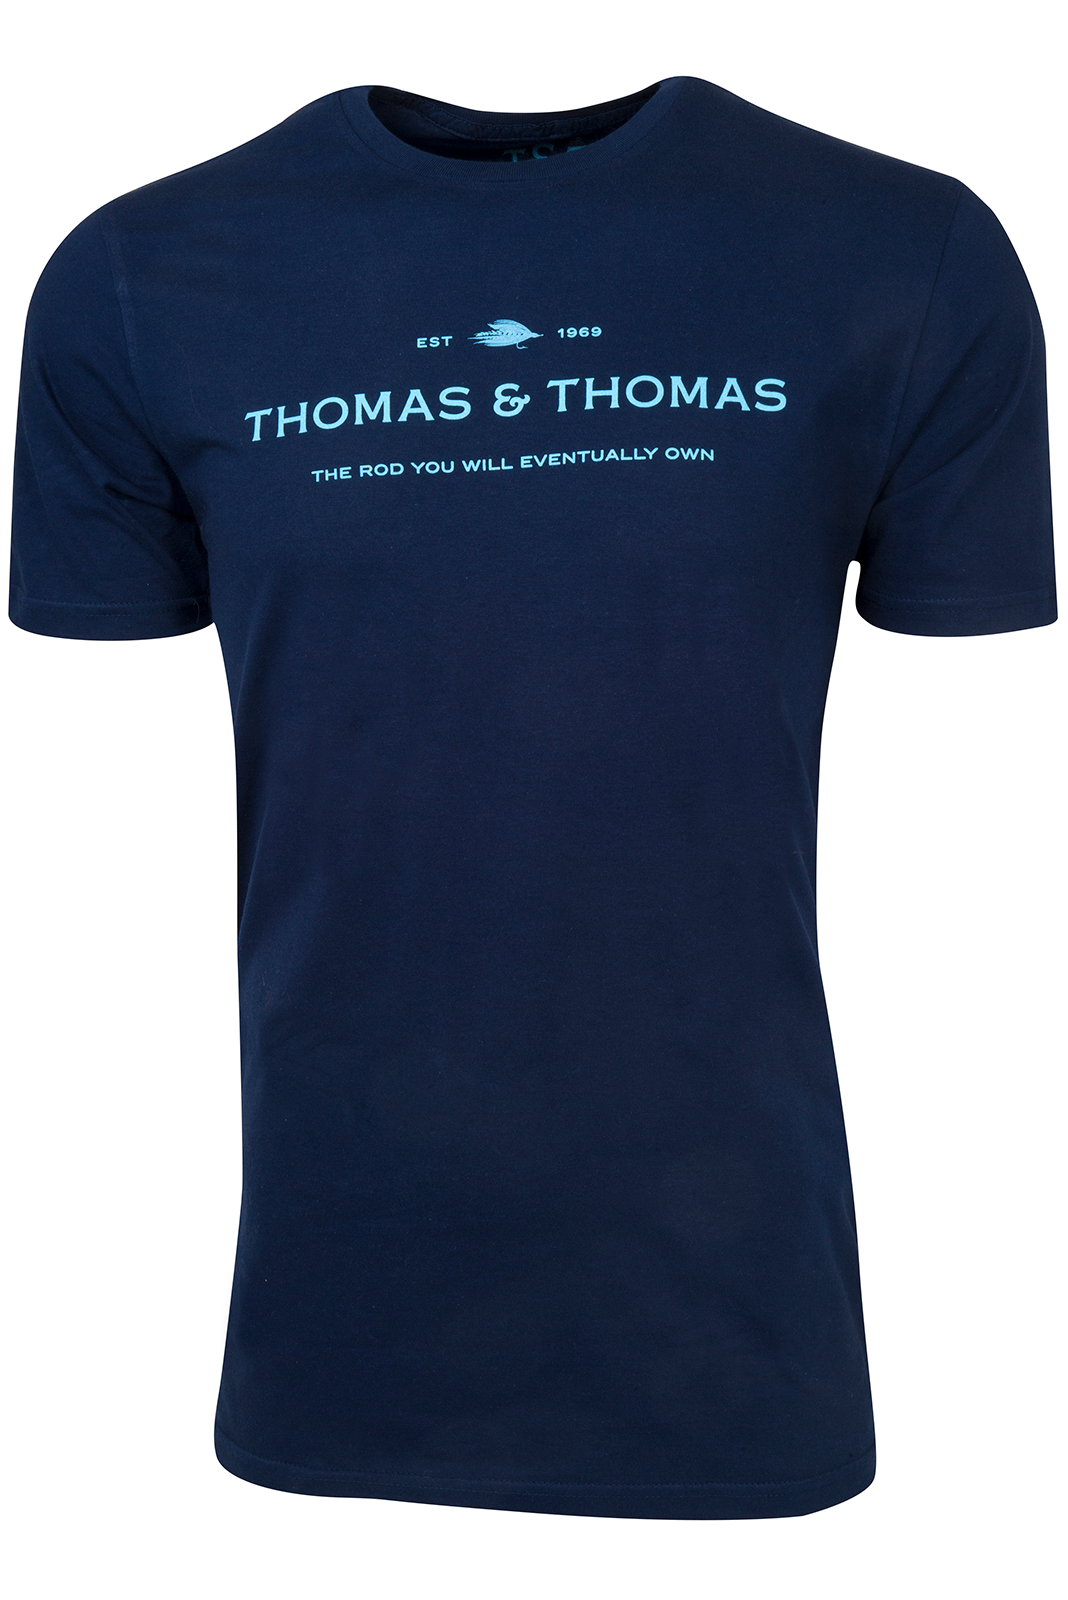 Thomas & Thomas TRYWEO T-Shirt - Hunter Green - Navy Blue